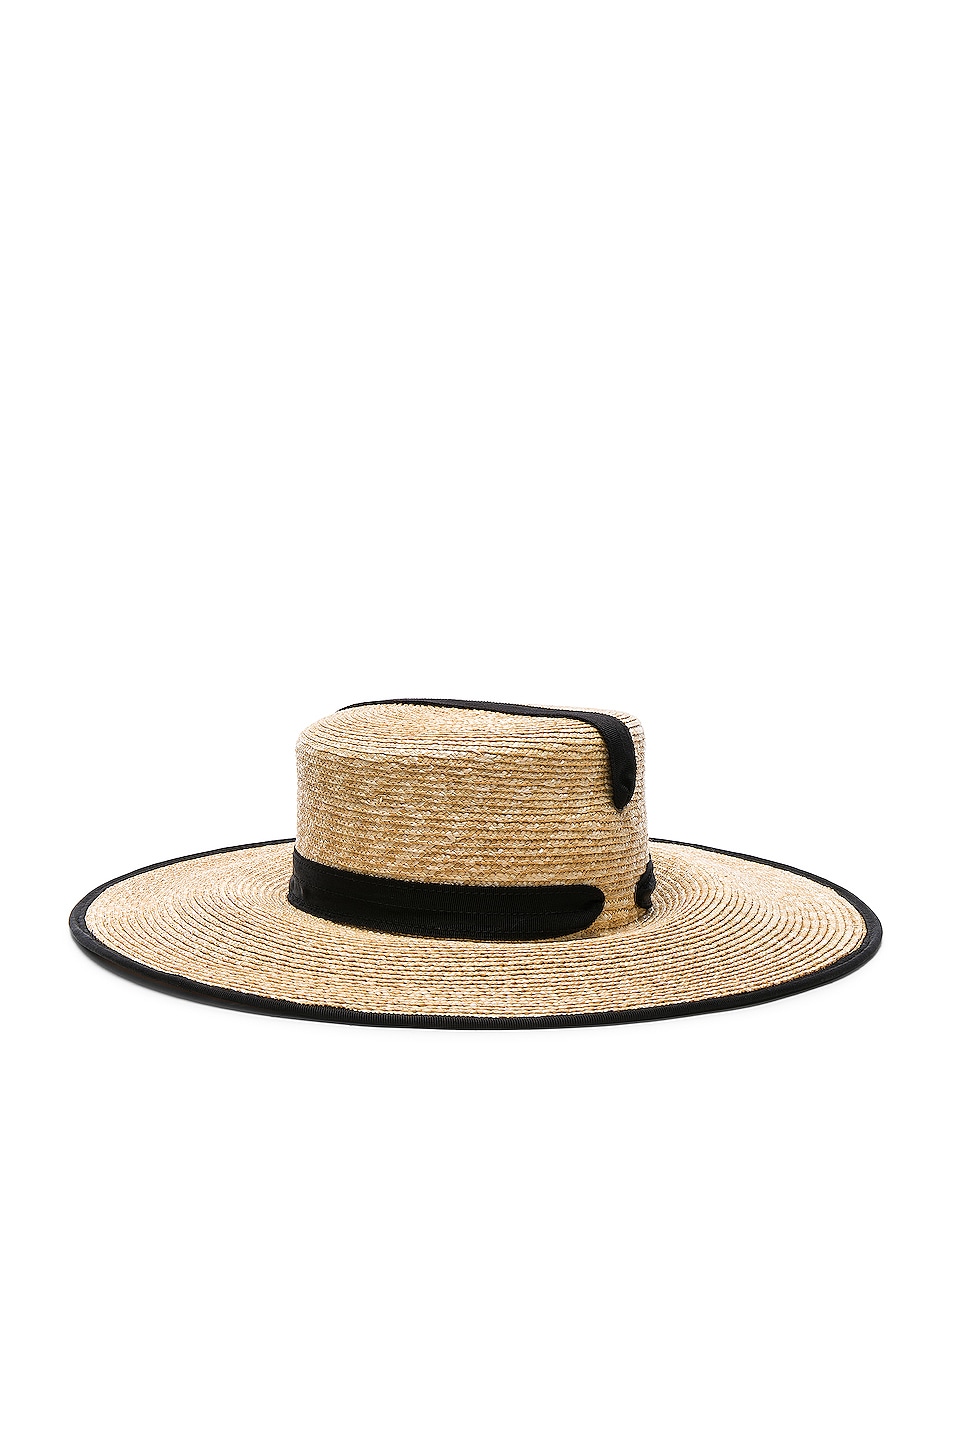 Image 1 of Lola Hats Zorro Hat in Natural & Black